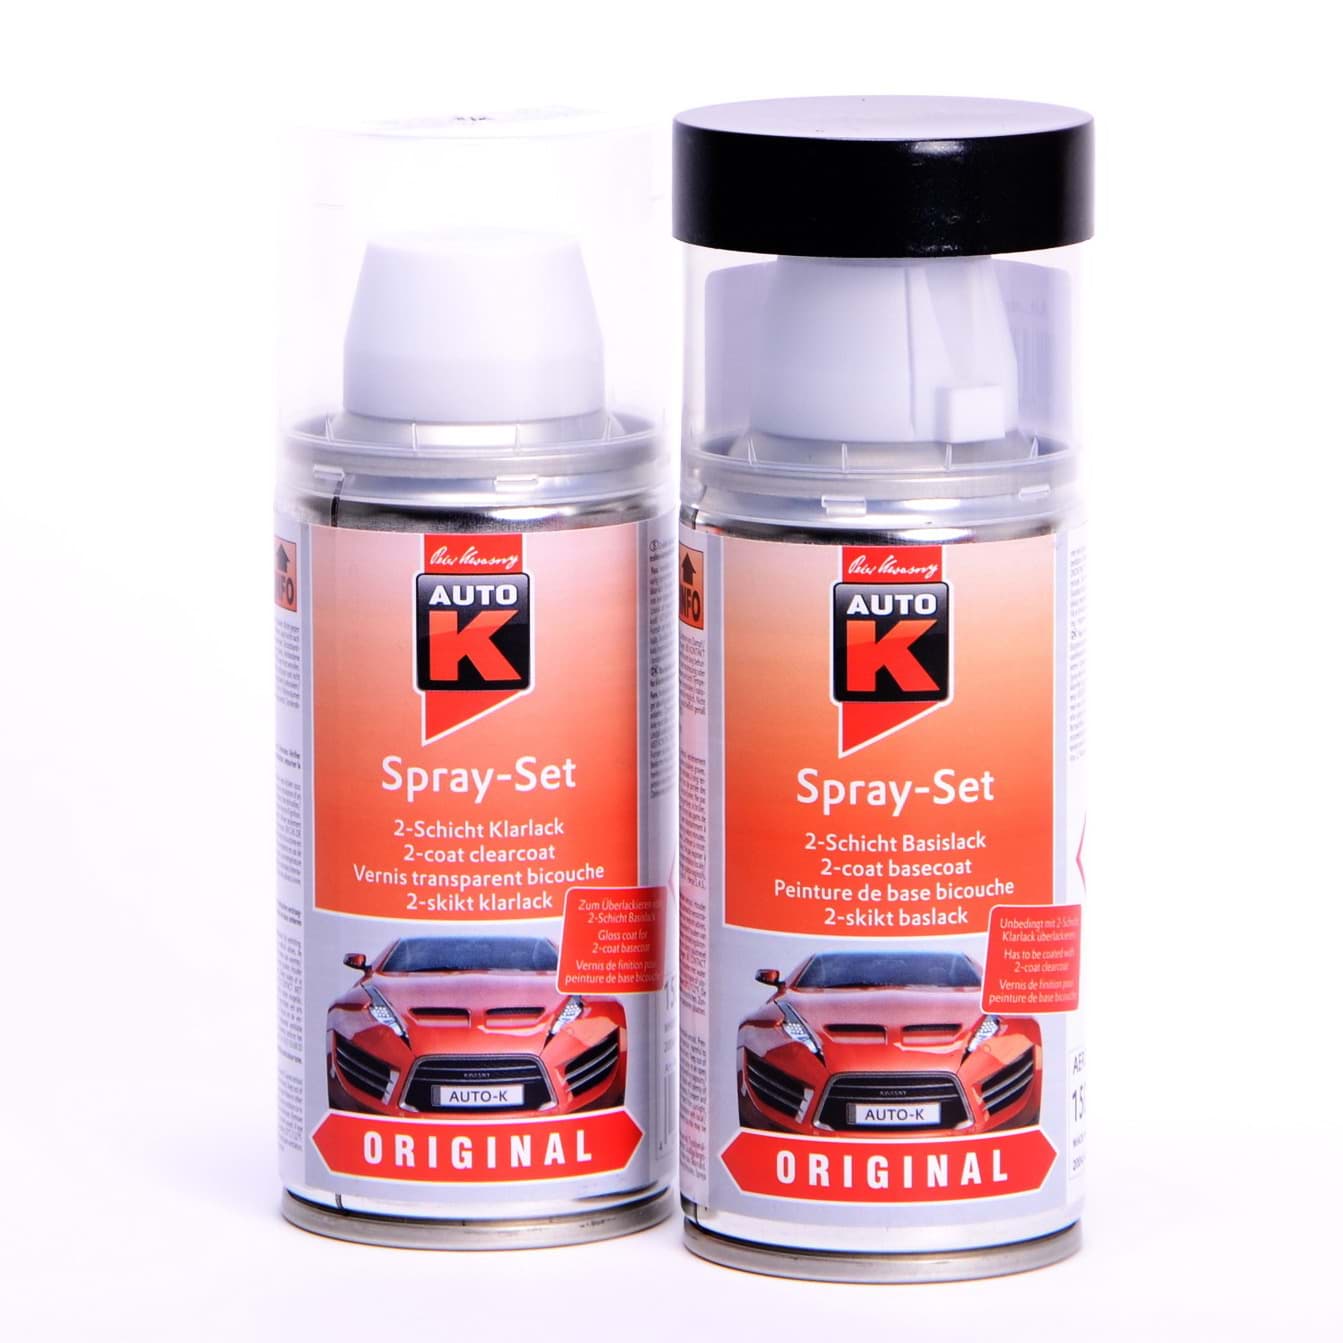 Obraz Auto-K Spray-Set Autolack für Volkswagen, VW, Audi LW5Z Jazzblue perl met 20789